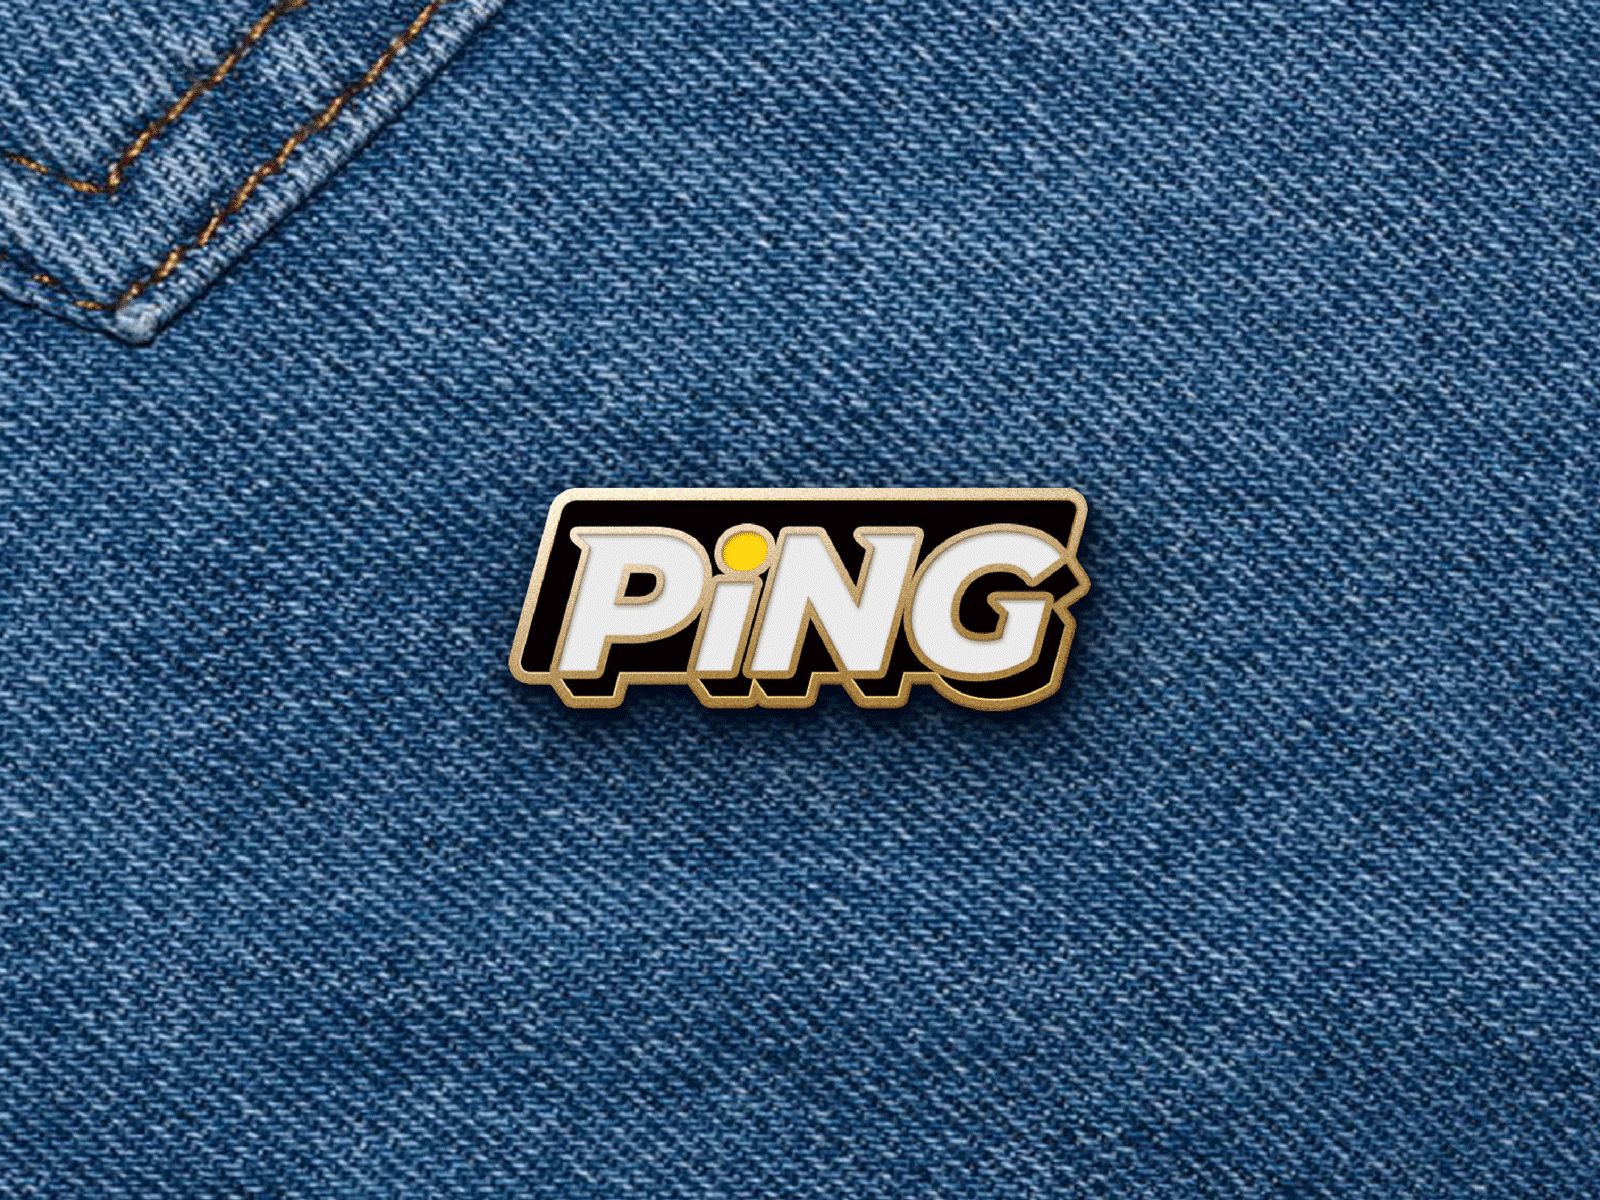 PiNG's personal logo pin&sticker logo pin sticker